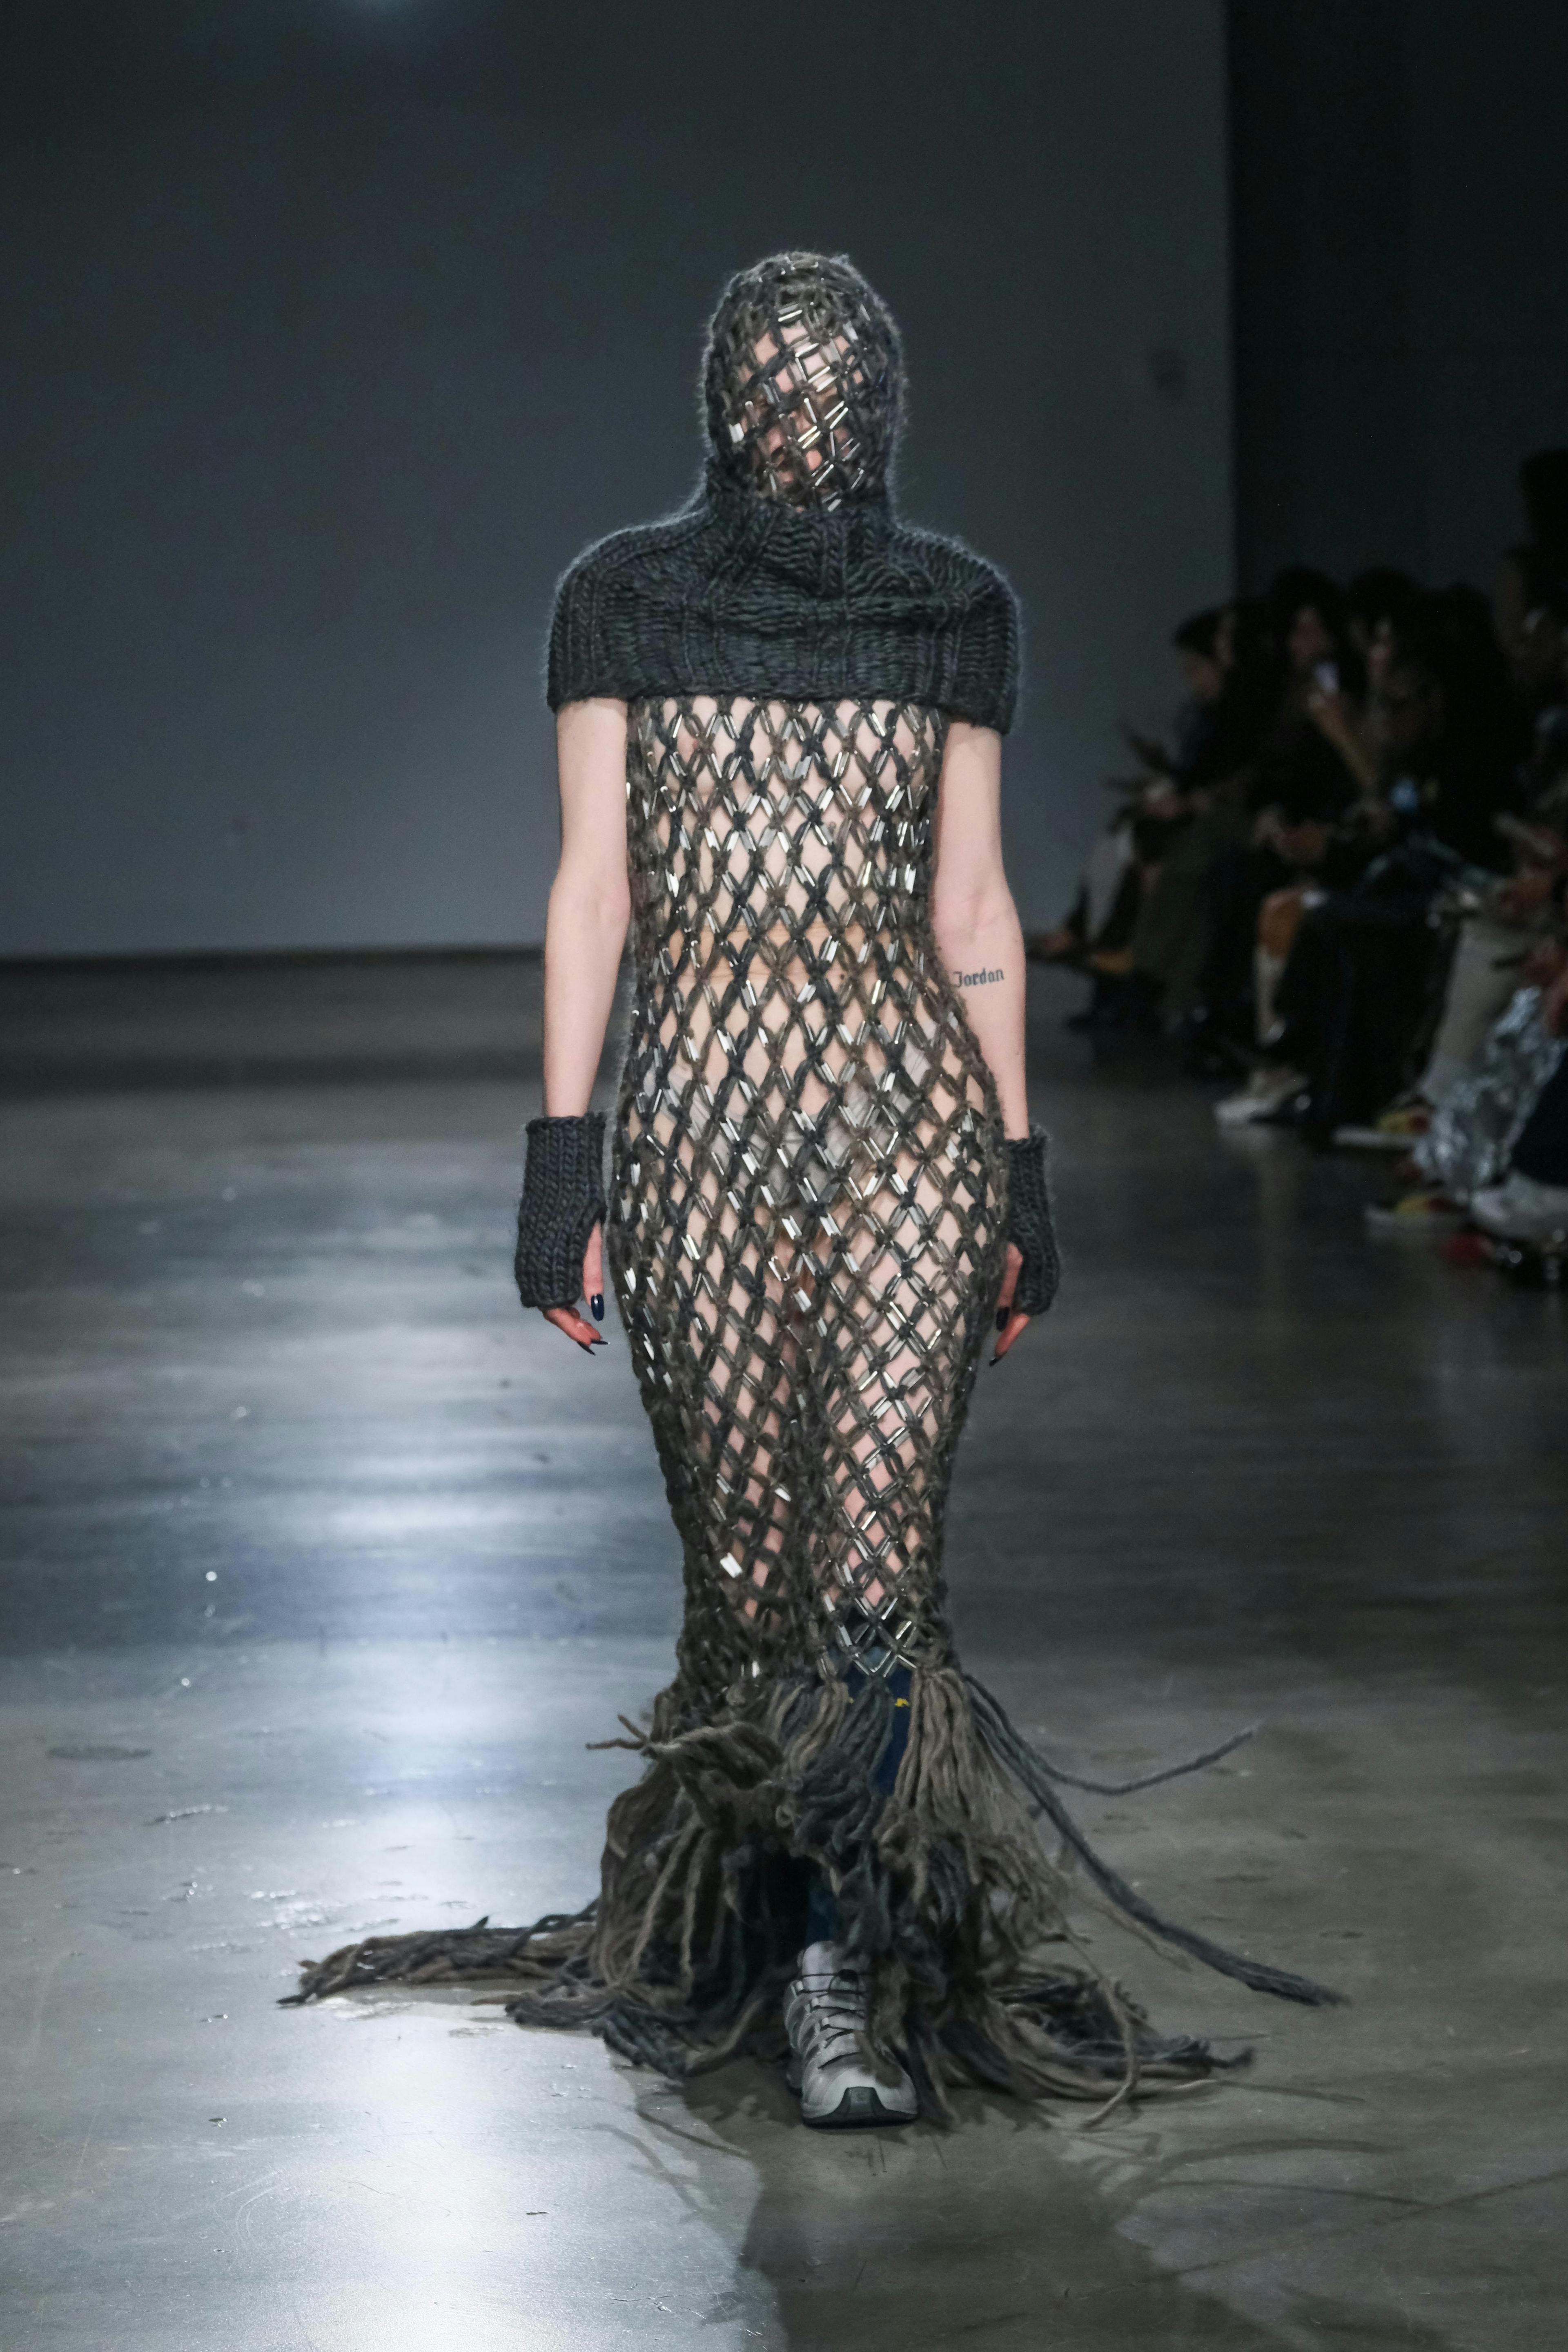 model on runway wearing mesh dress with gray knit shawl